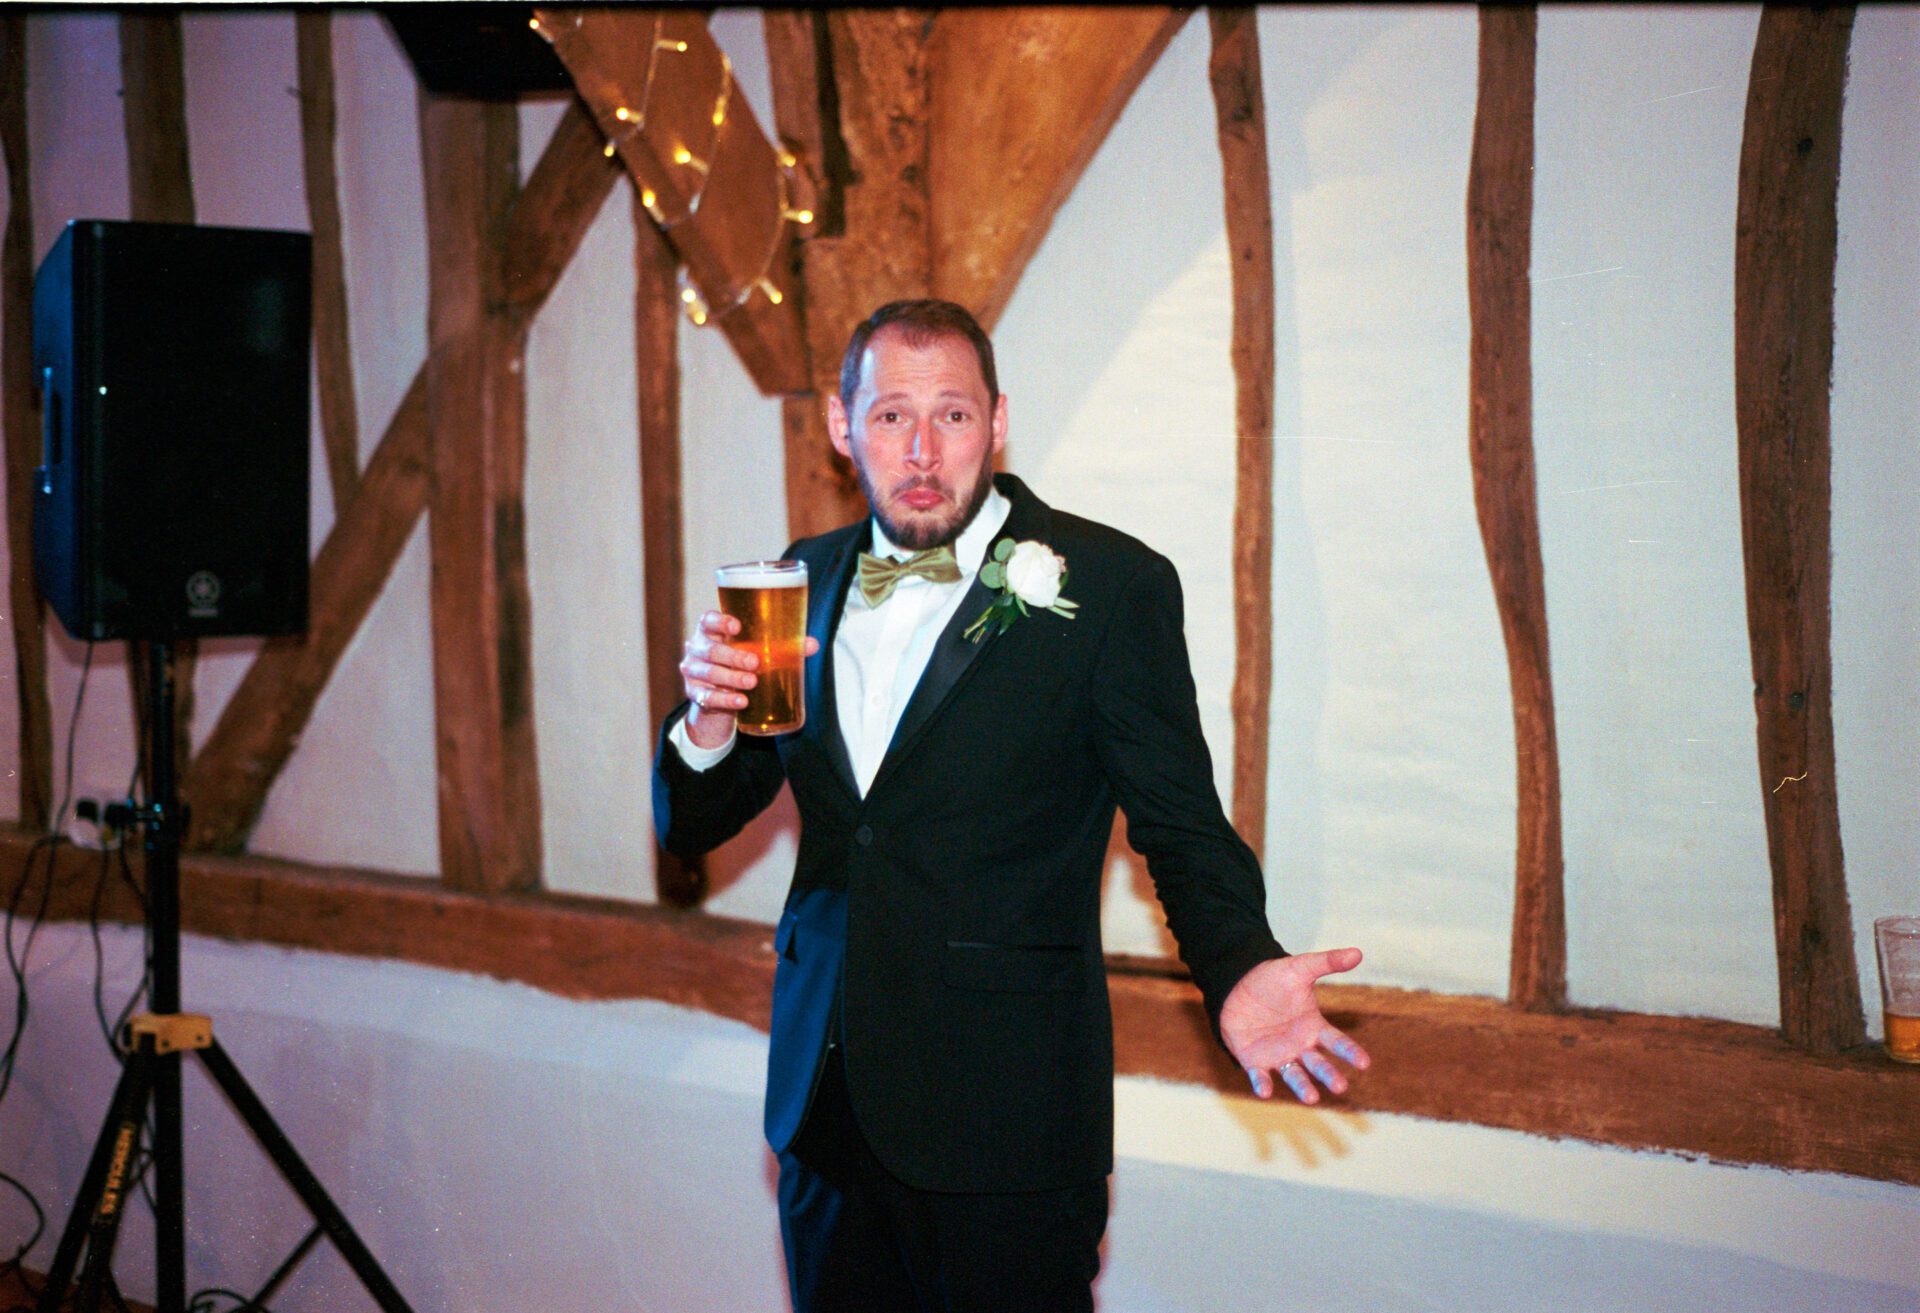 Groom enjoys wedding party on 35mm film